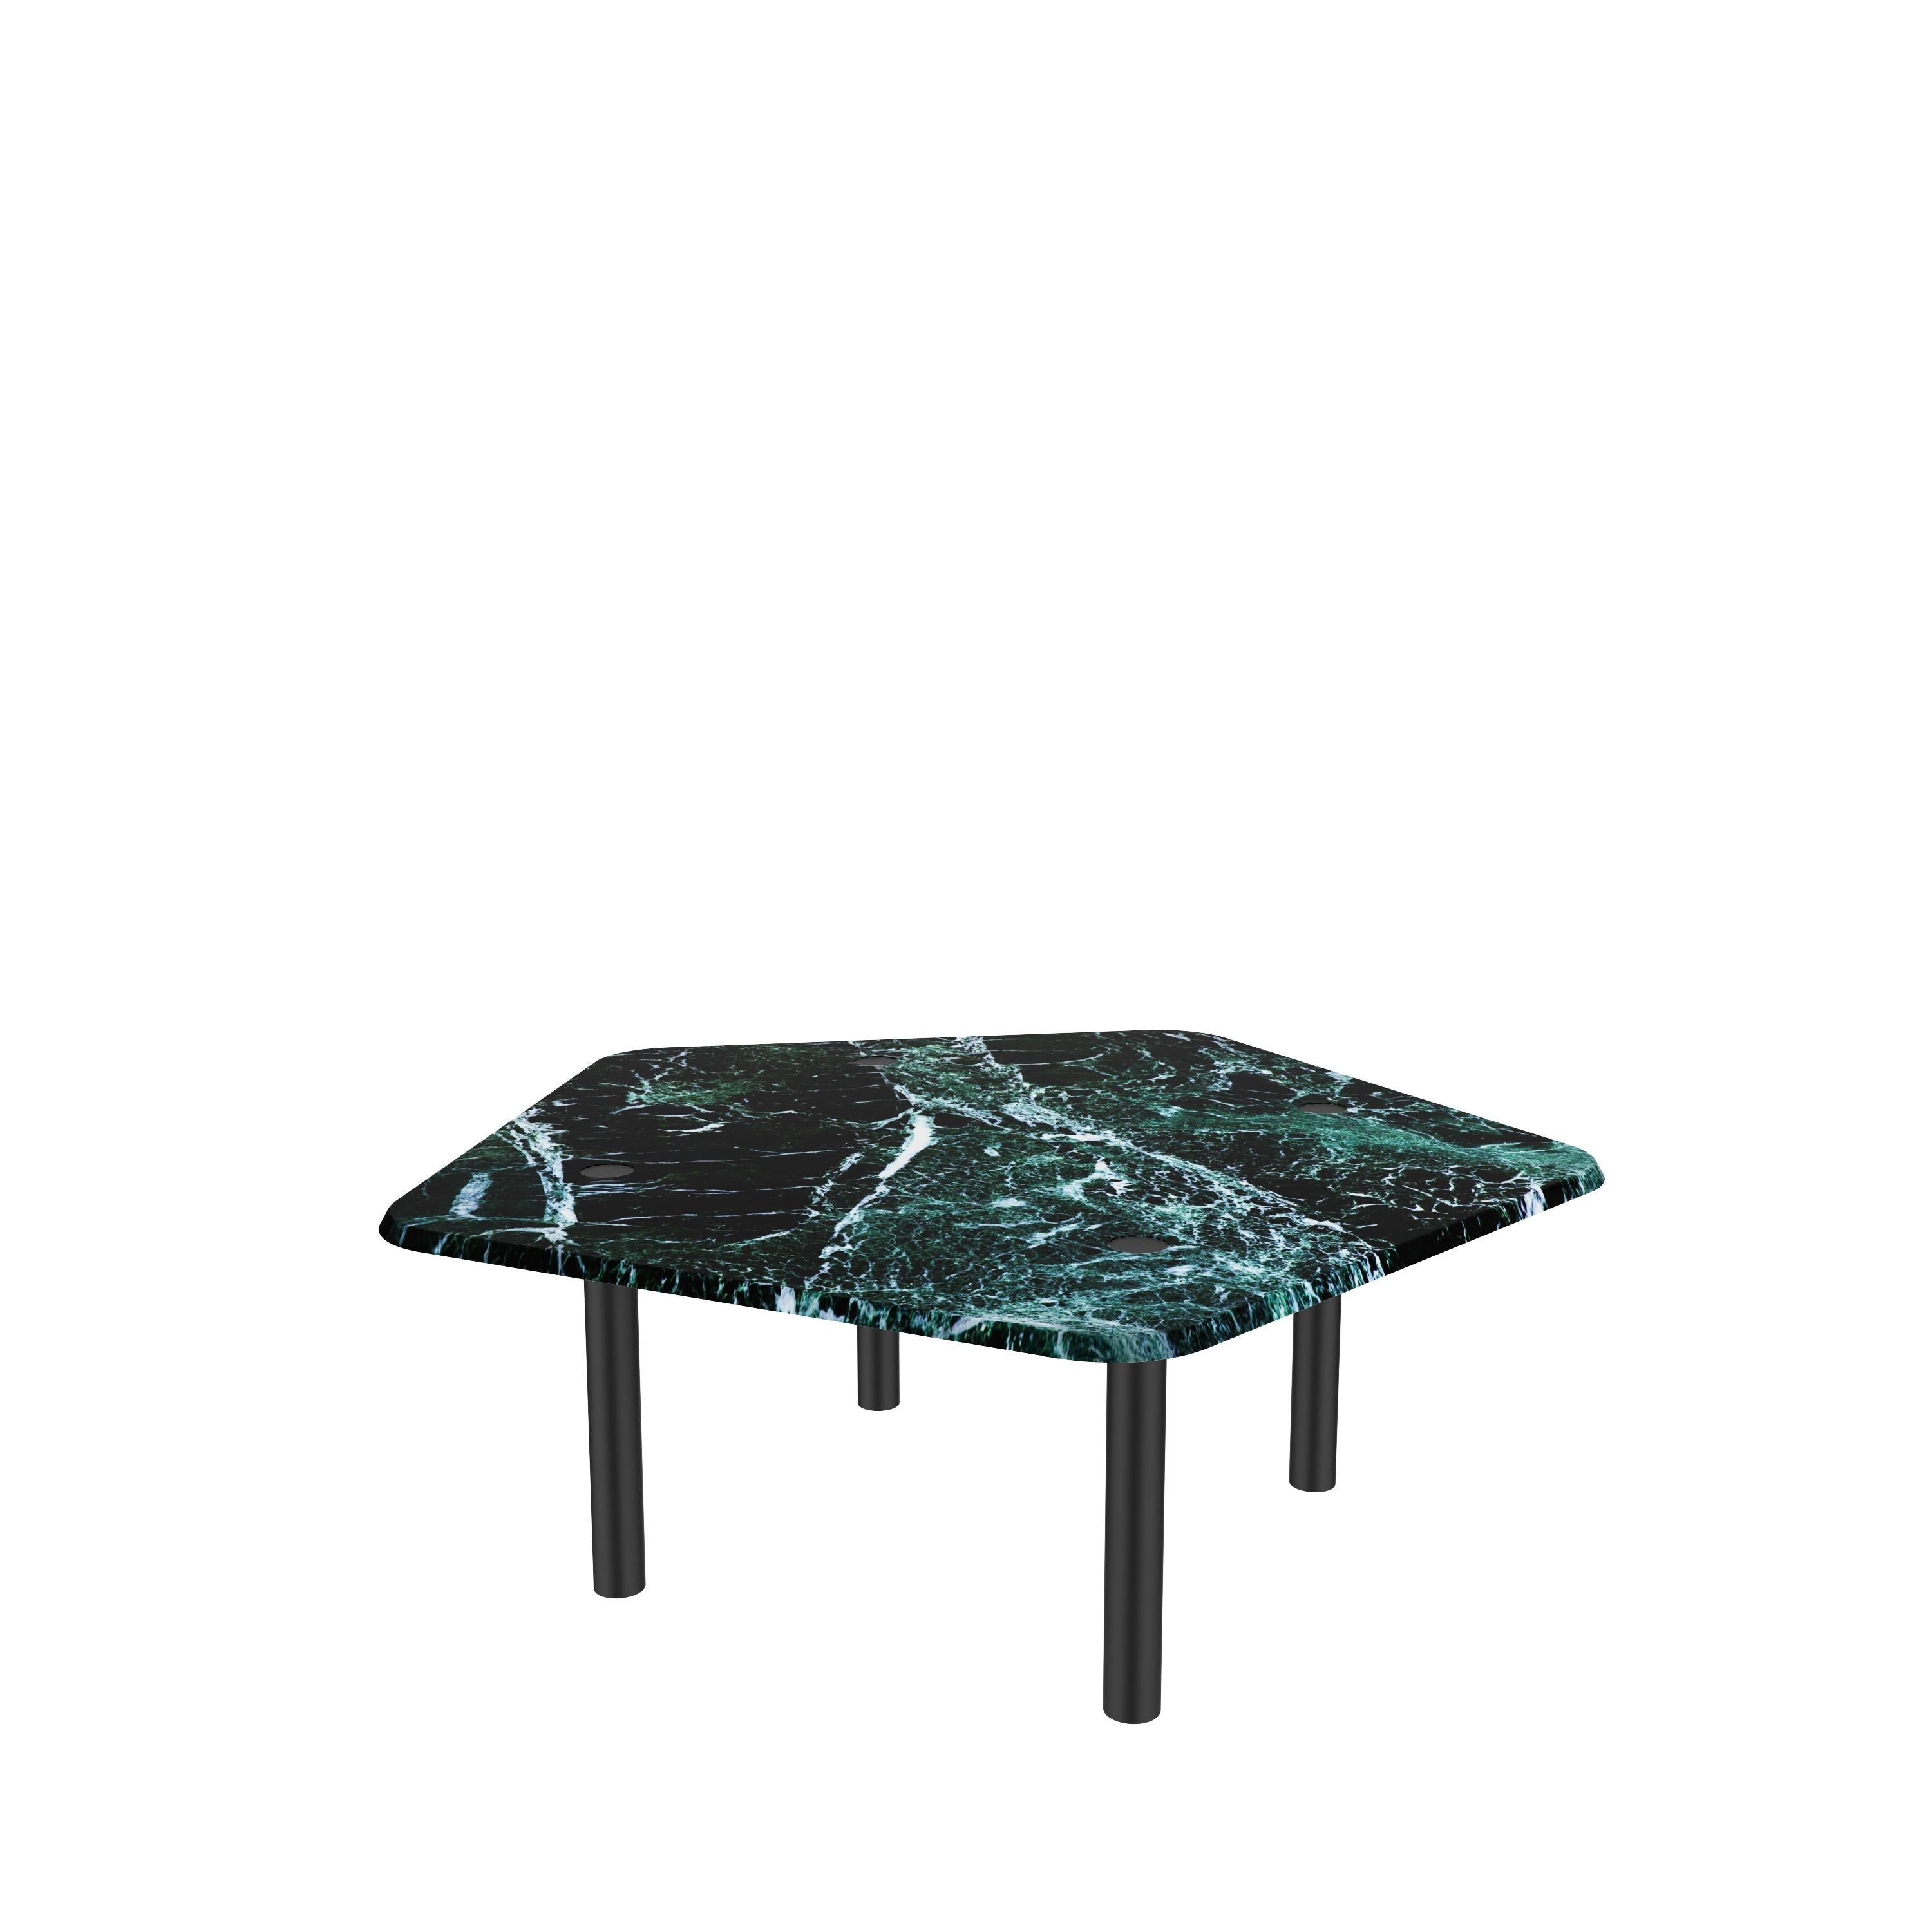 Scandinavian Modern NORDST JOB Coffee Table, Italian White Mountain Marble, Danish Modern Design For Sale